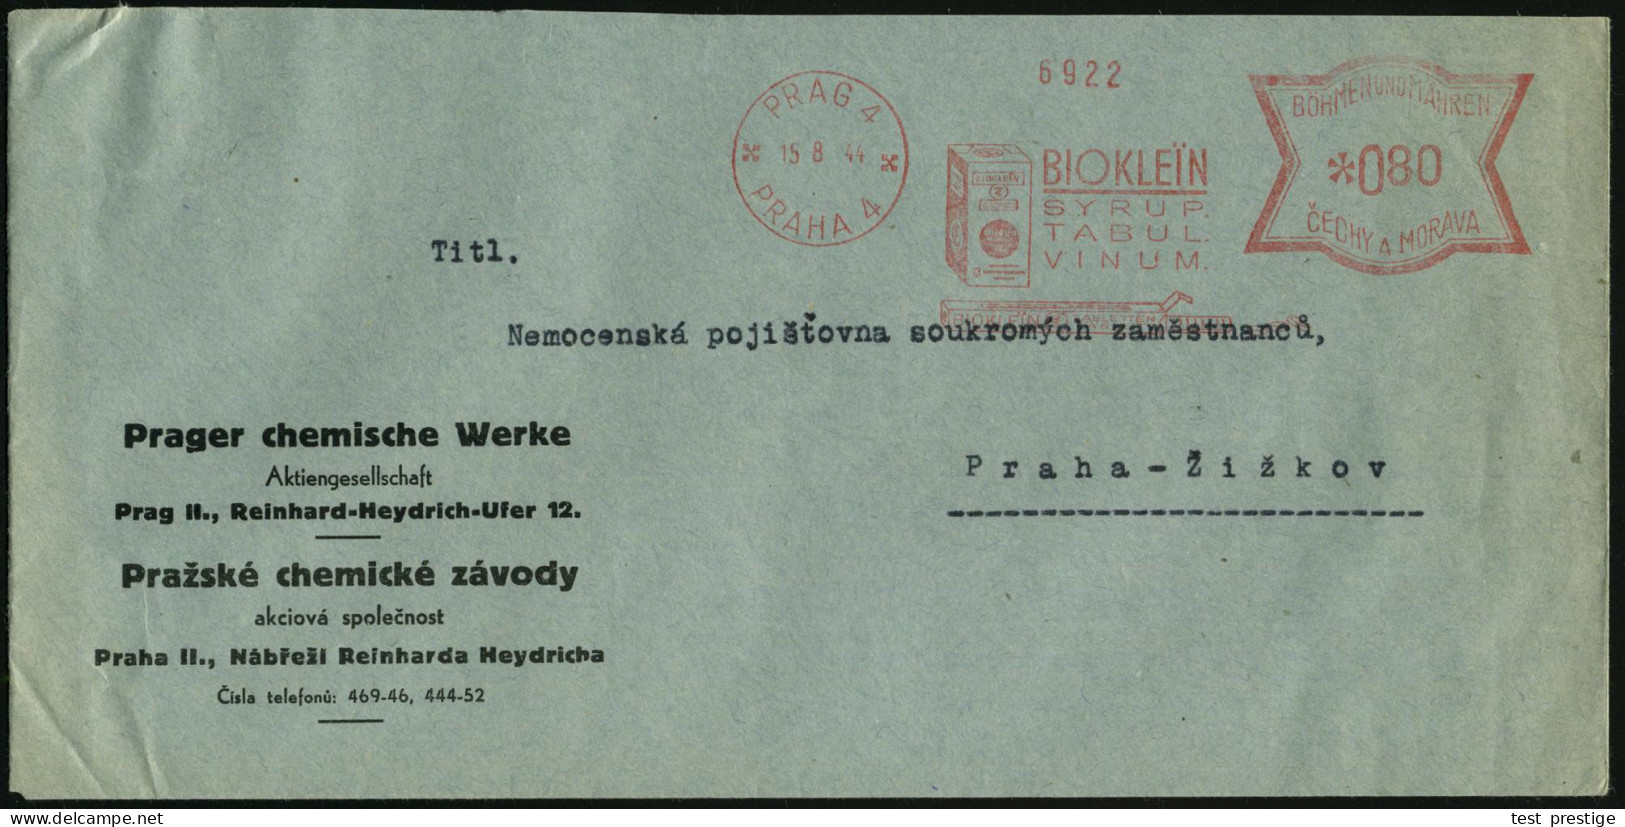 BÖHMEN & MÄHREN 1944 (15.8.) AFS Francotyp: PRAG 4/PRAHA 4/BIOKLEIN/SYRUP/TABUL/VINUM.. (Bioklein-Packung) Firmen-Bf.: P - Química